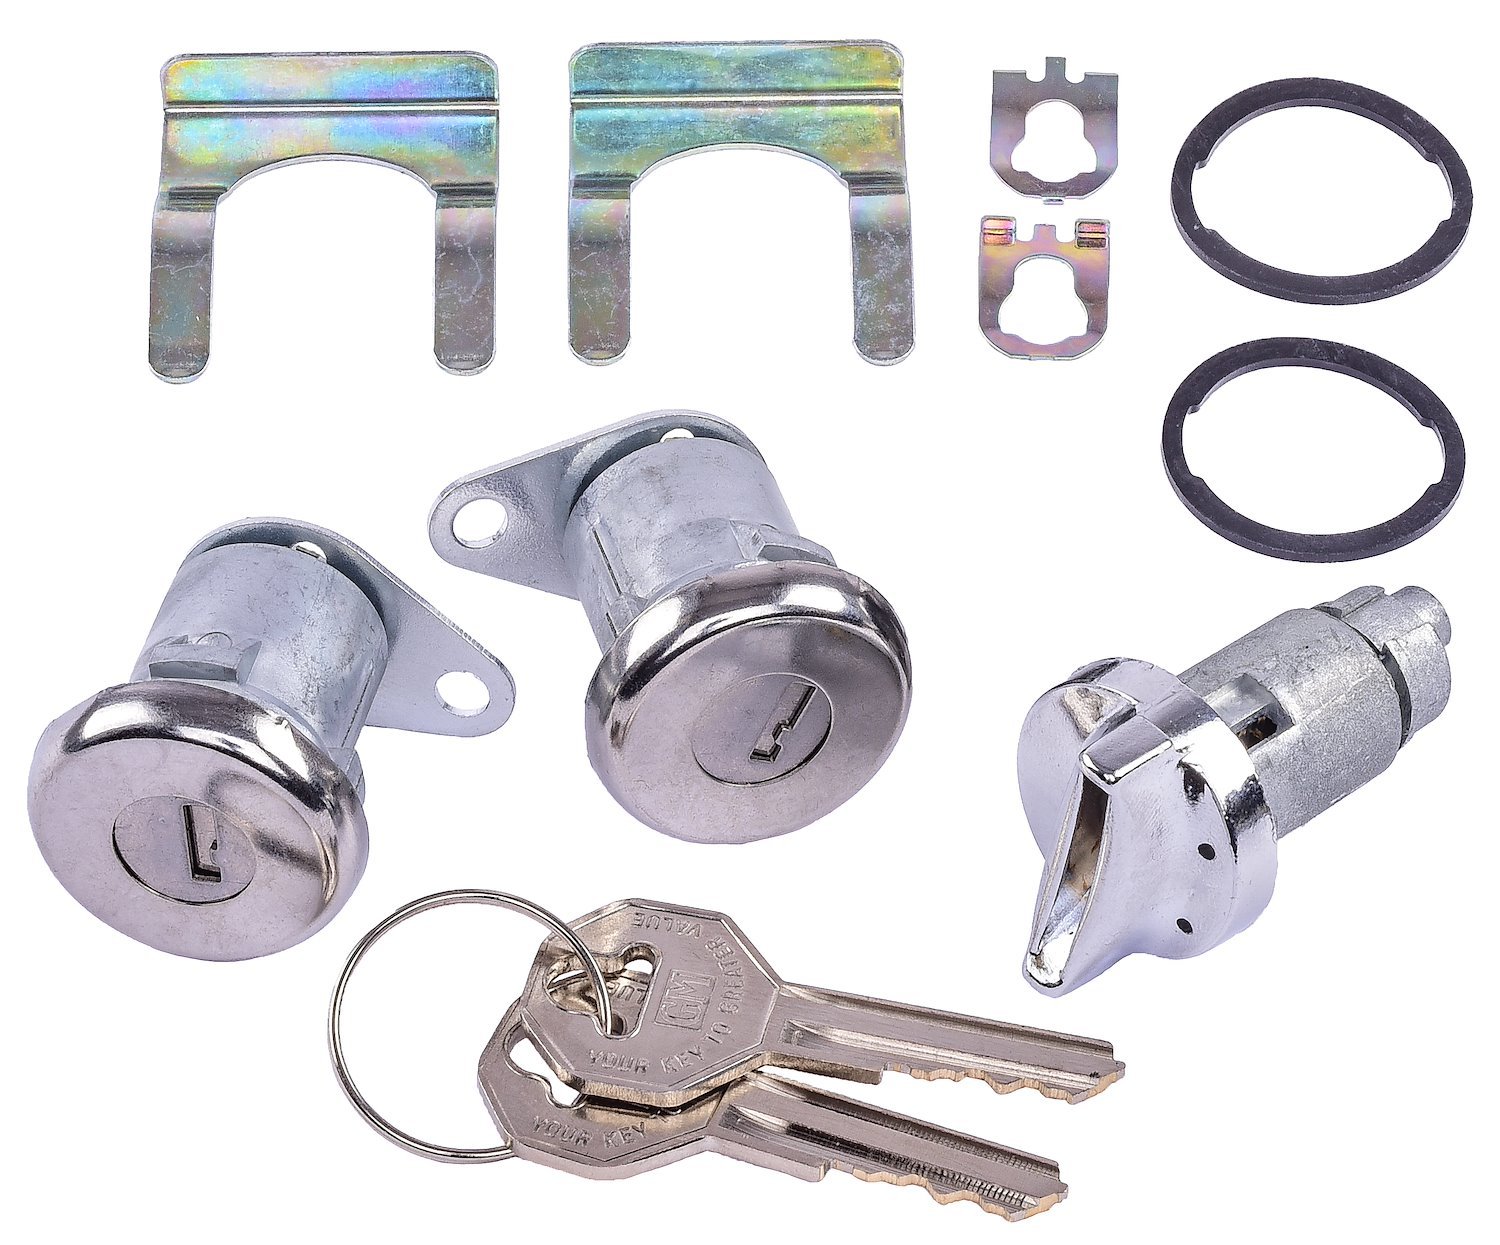 Ignition & Door Lock Set Fits Select 1959-1964 GM Models [Original Octagon Keys]